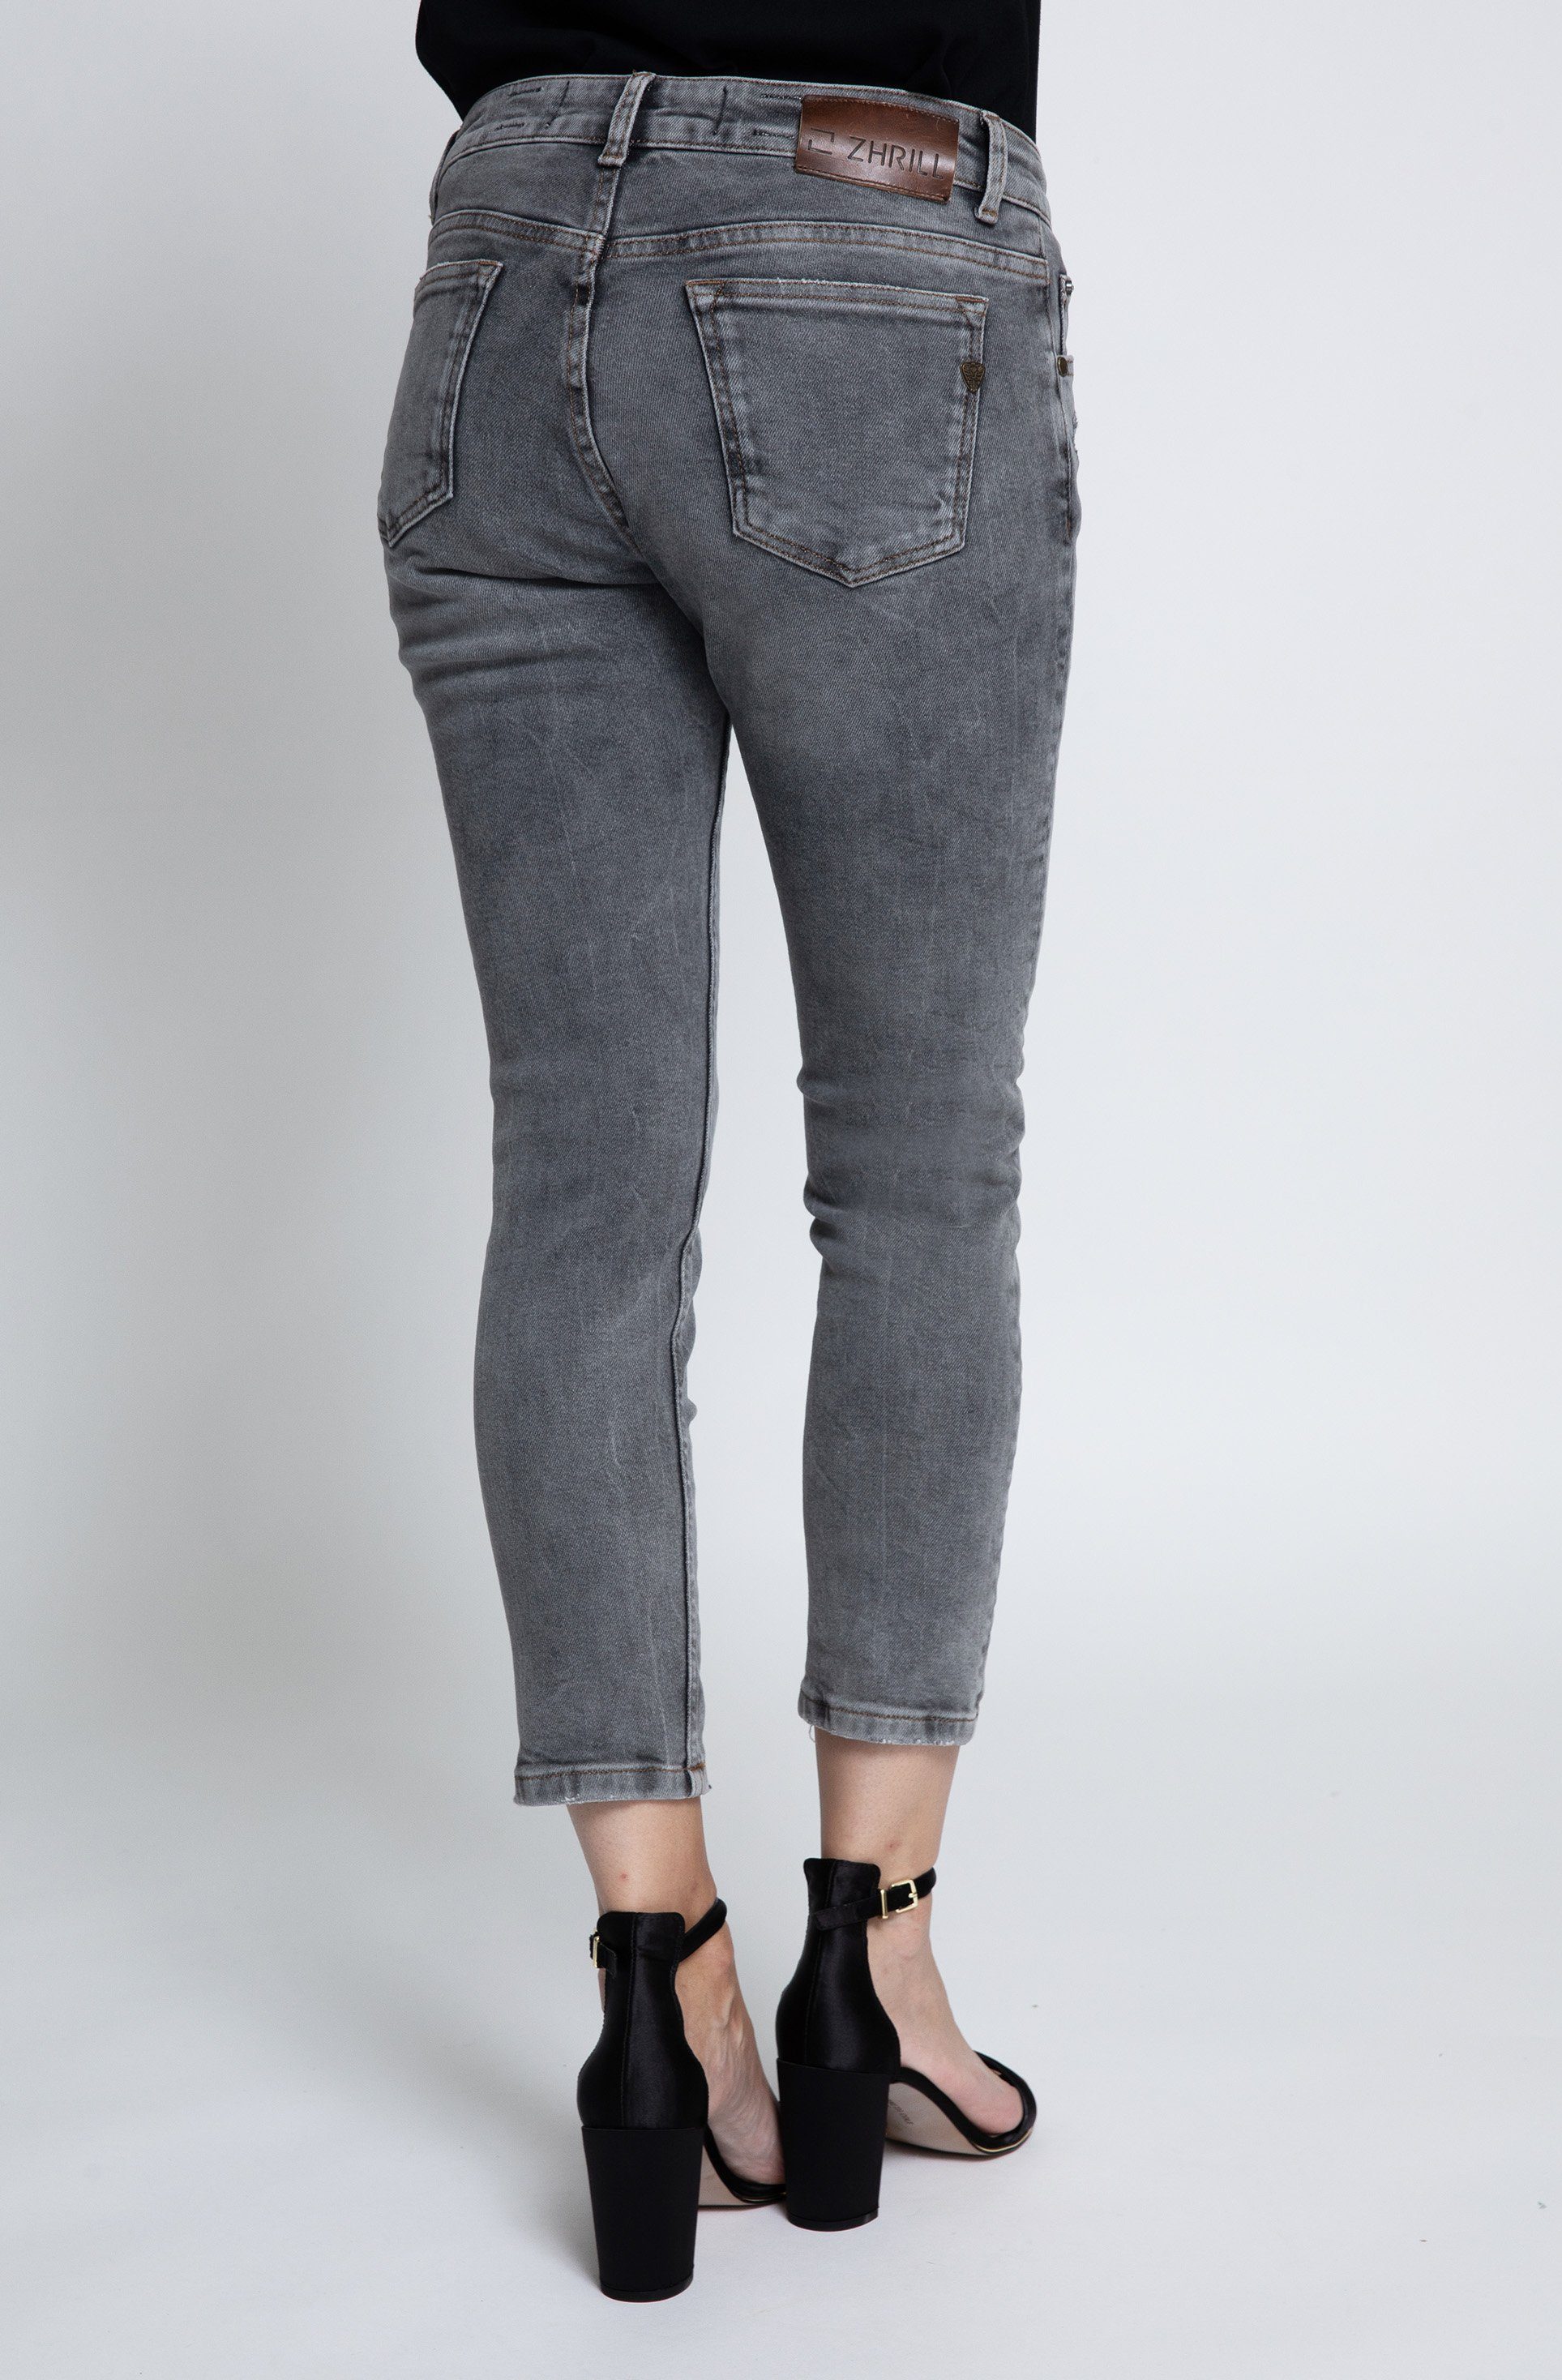 7/8-Jeans Cropped Anita Vintage GREY Momjeans 7/8 Slim Zhrill Pocket Fit 5 ANITA Damen